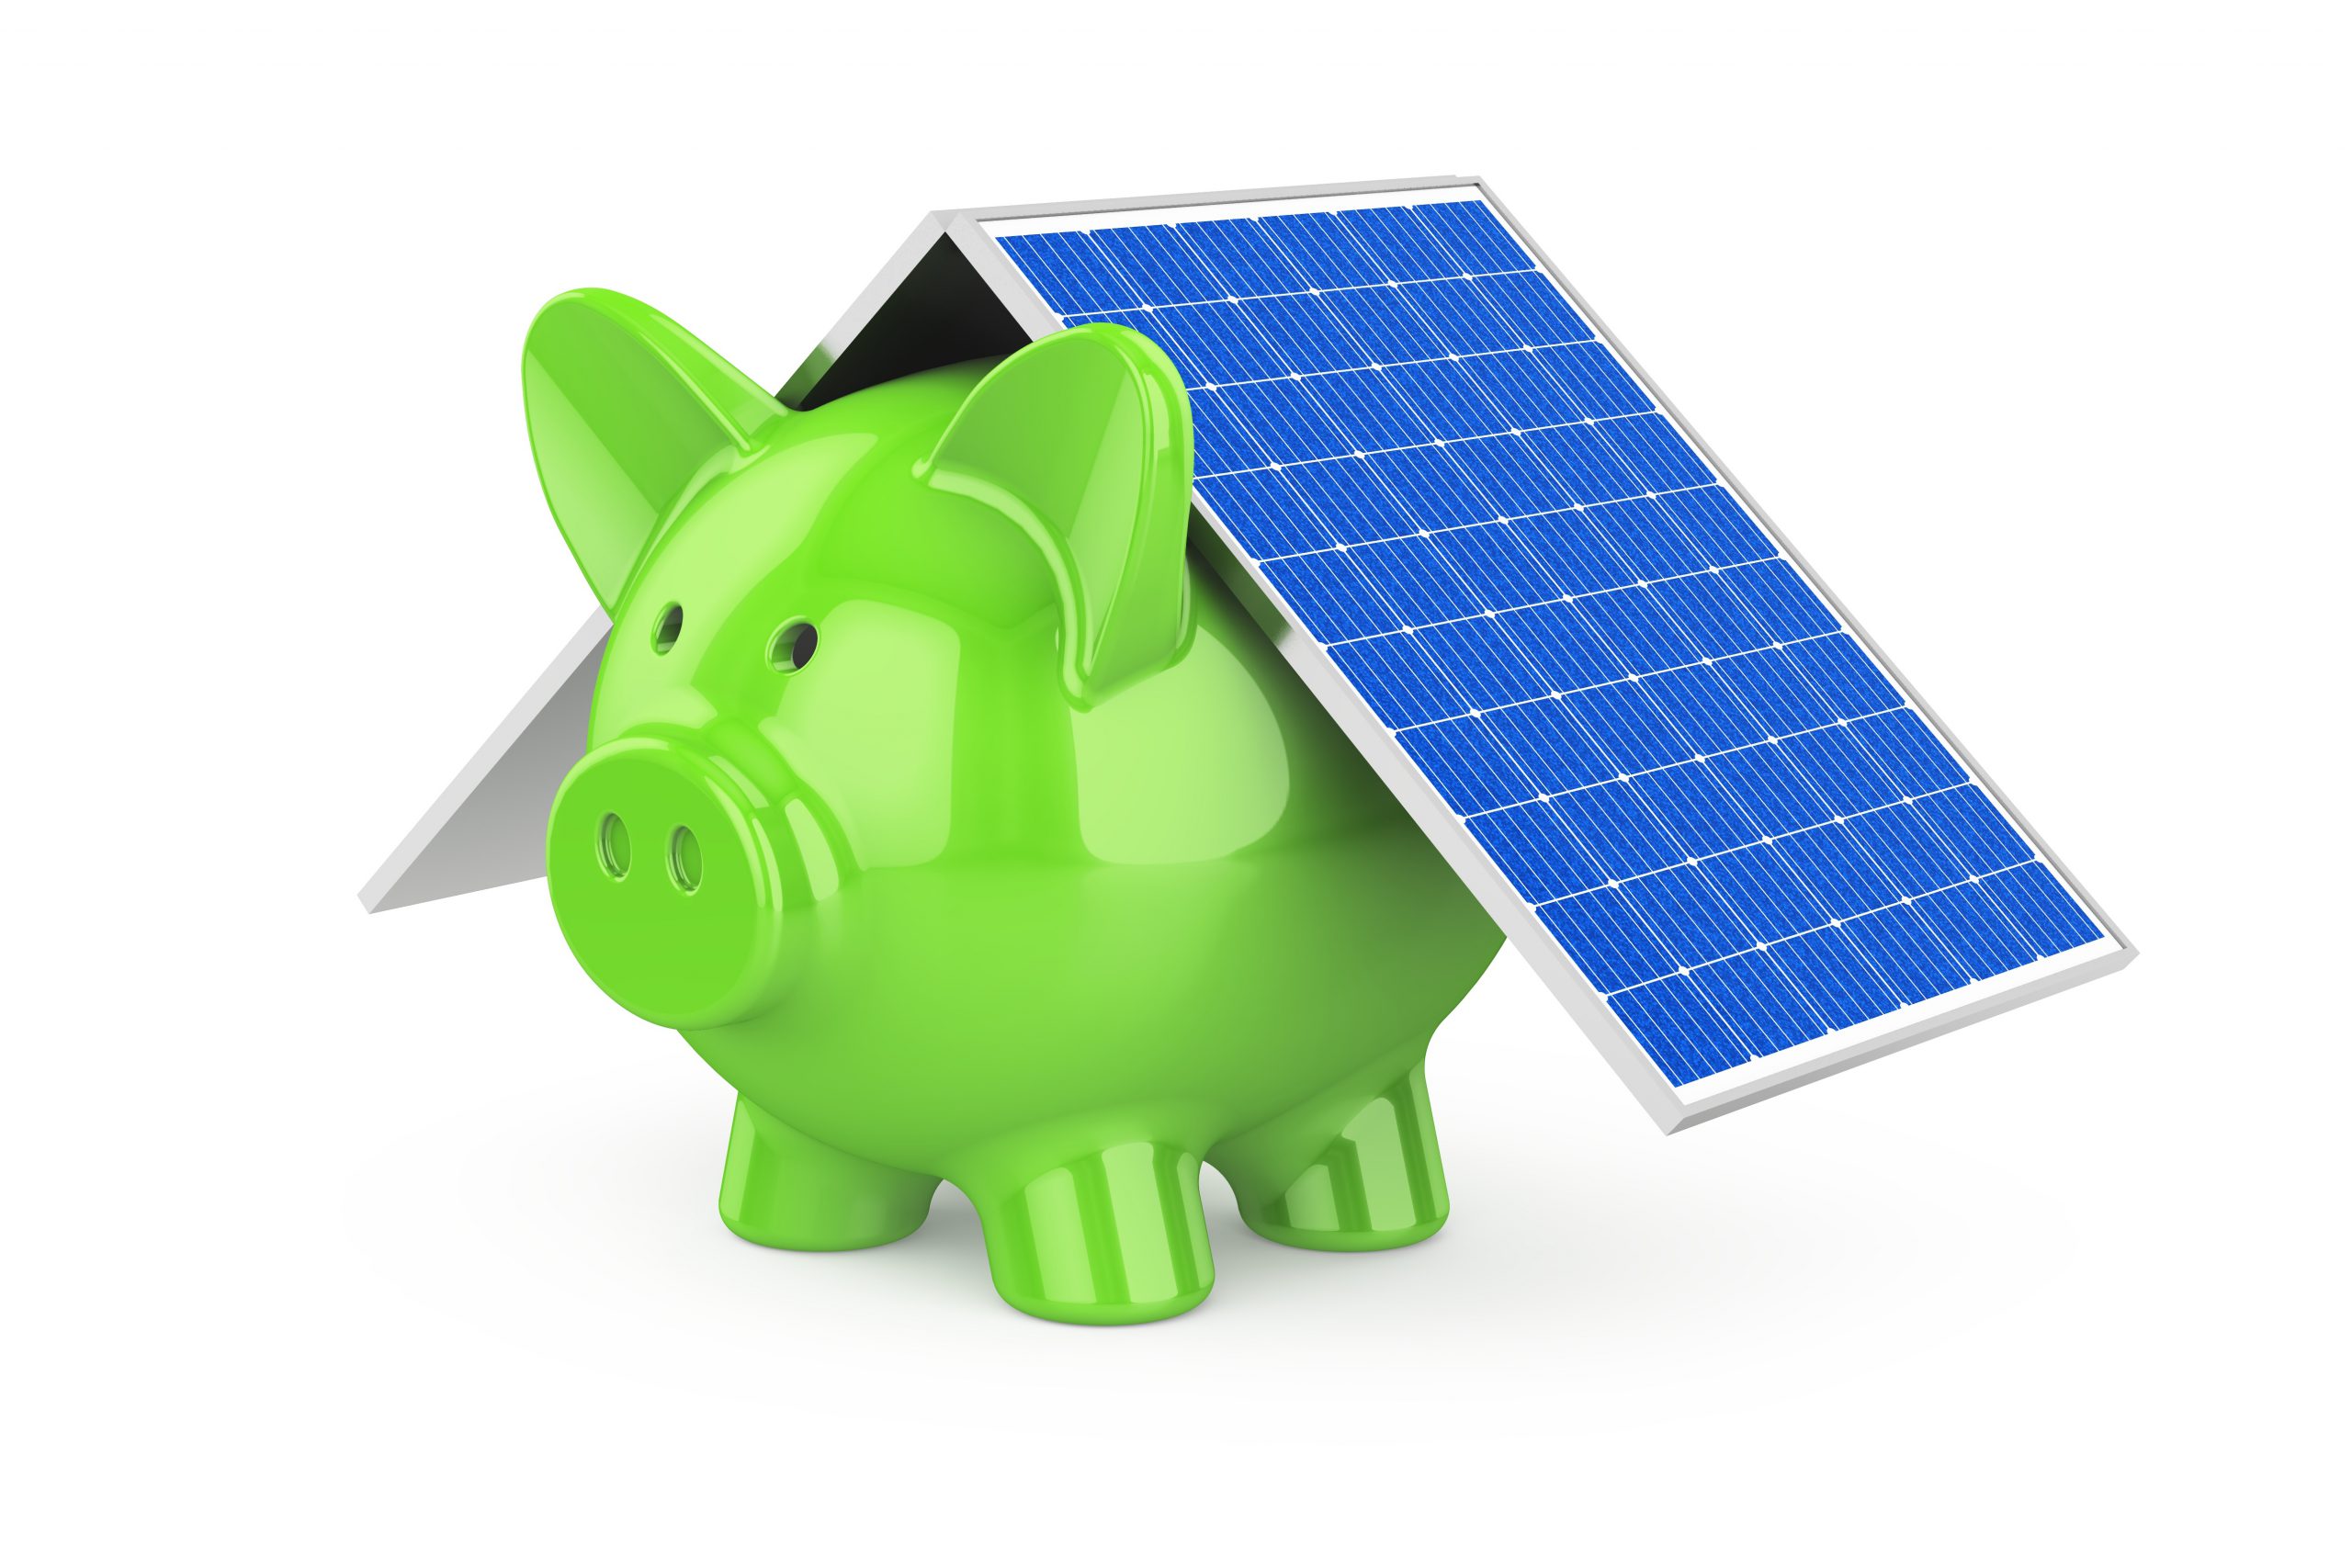 solar panel efficiency generates more money